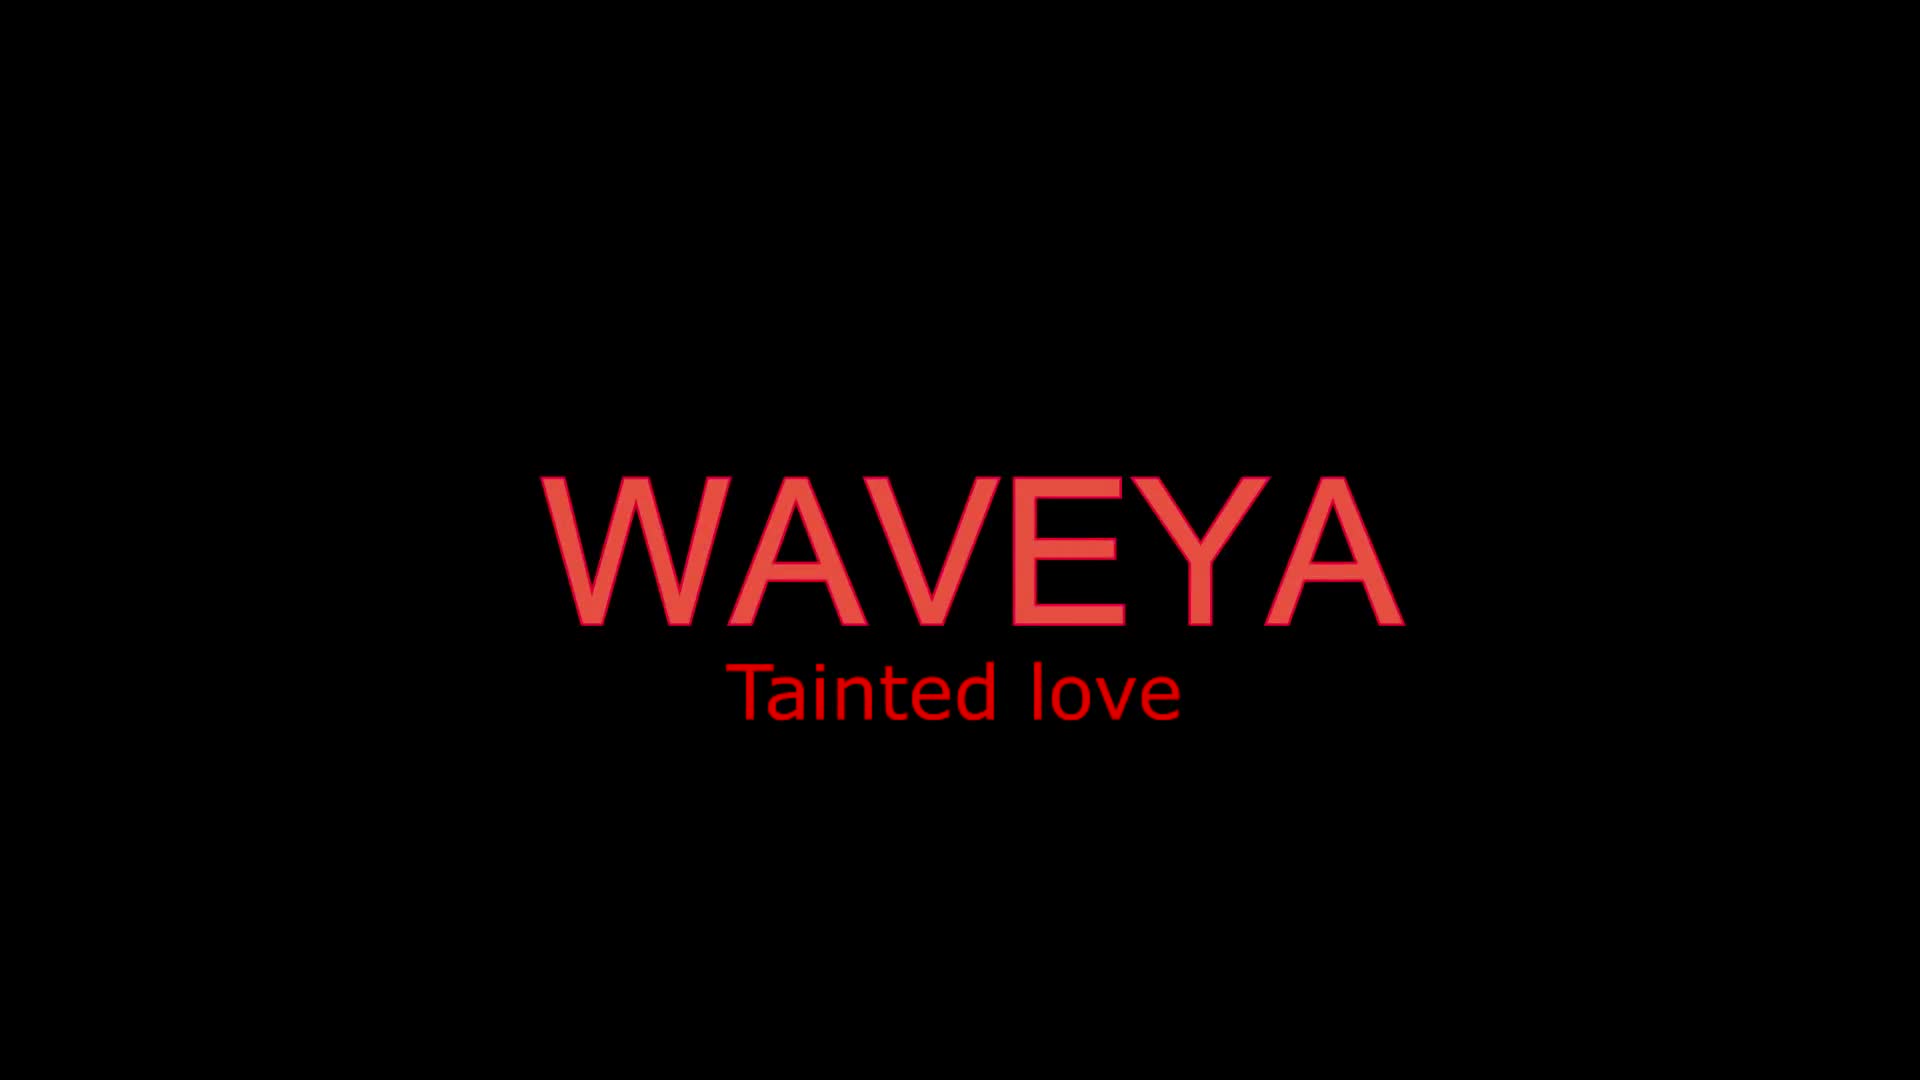 WAVEYA (Christmas present) sexy dance  – Tainted love